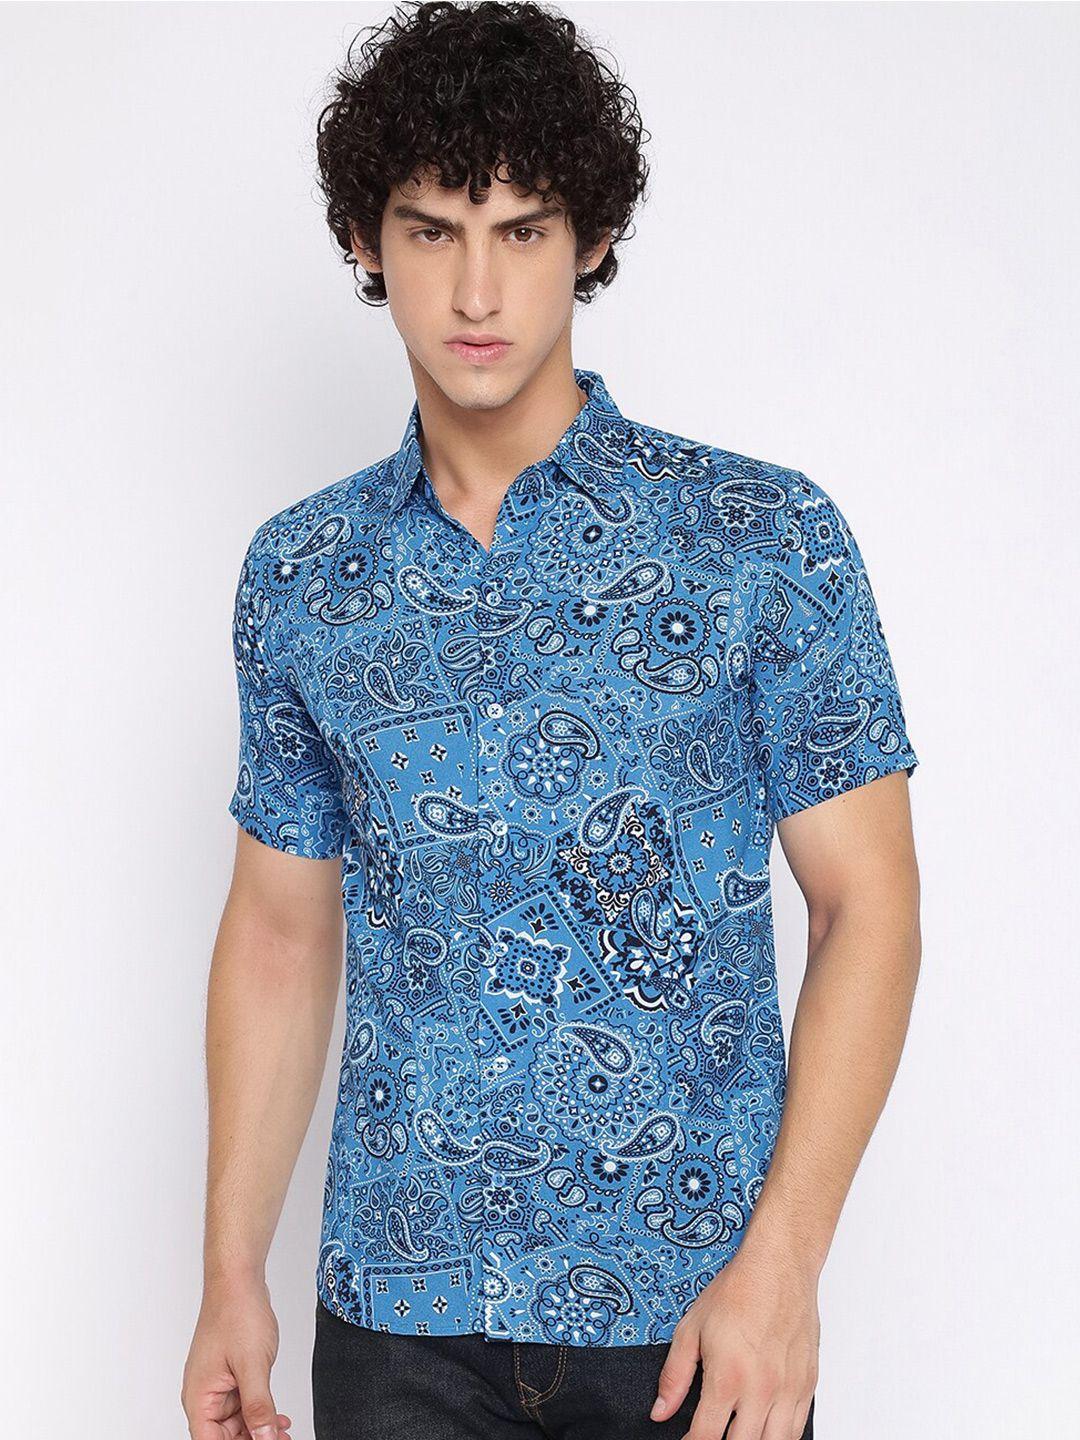 shurtz n skurtz relaxed ethnic motifs printed regular fit cotton casual shirt